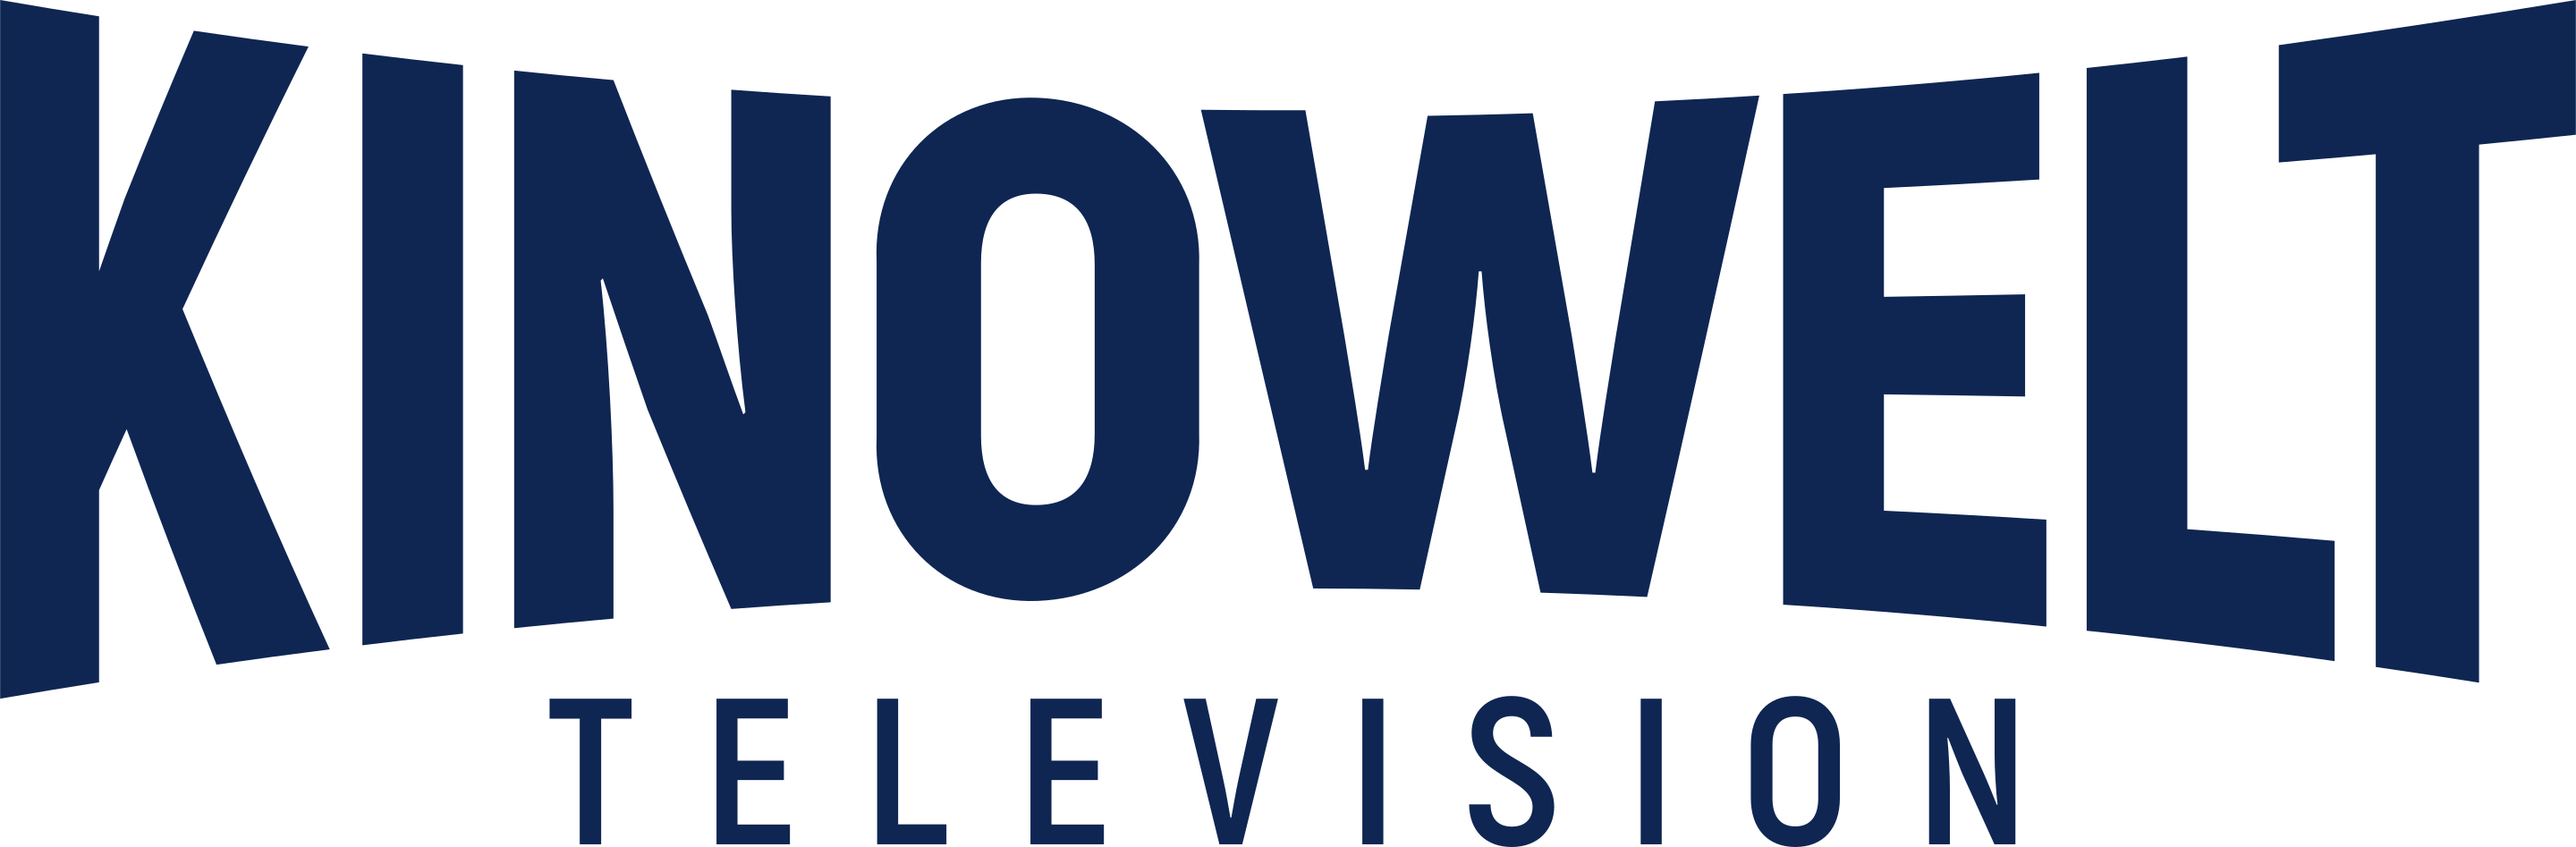 Client Logo Kinowelt TV